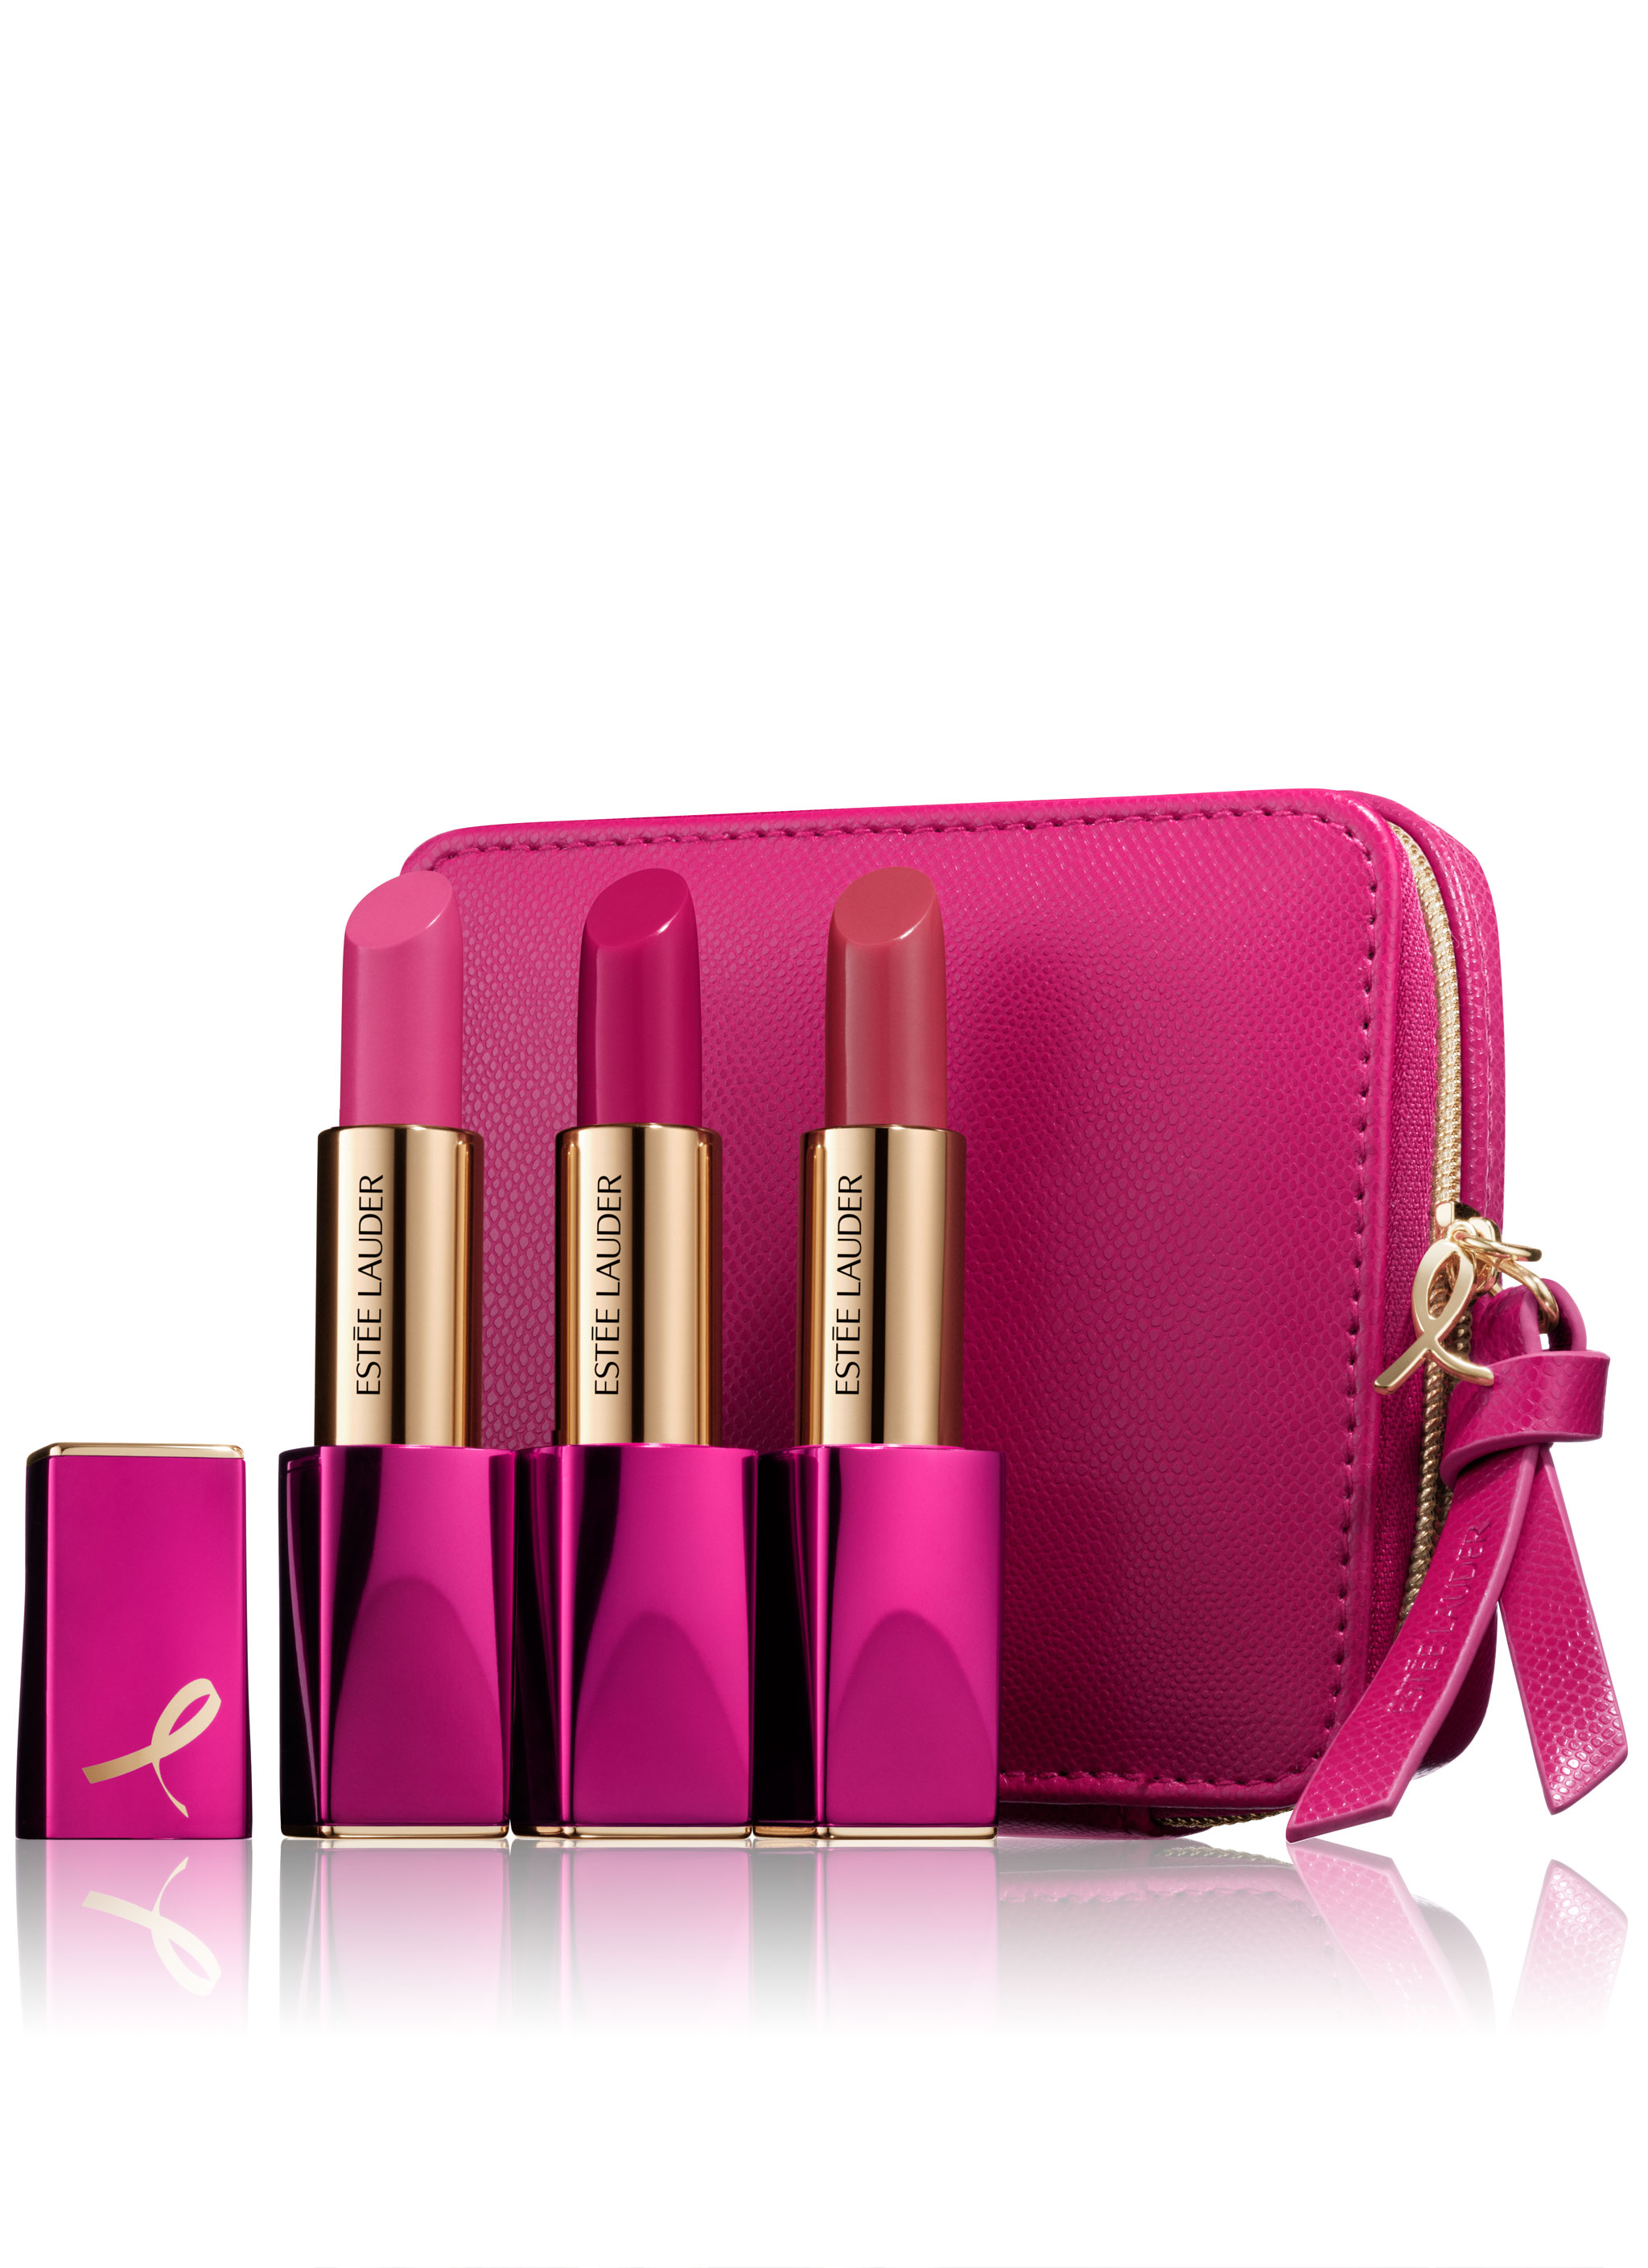 Estée Lauder Pink Perfection Lipstick Set.jpg